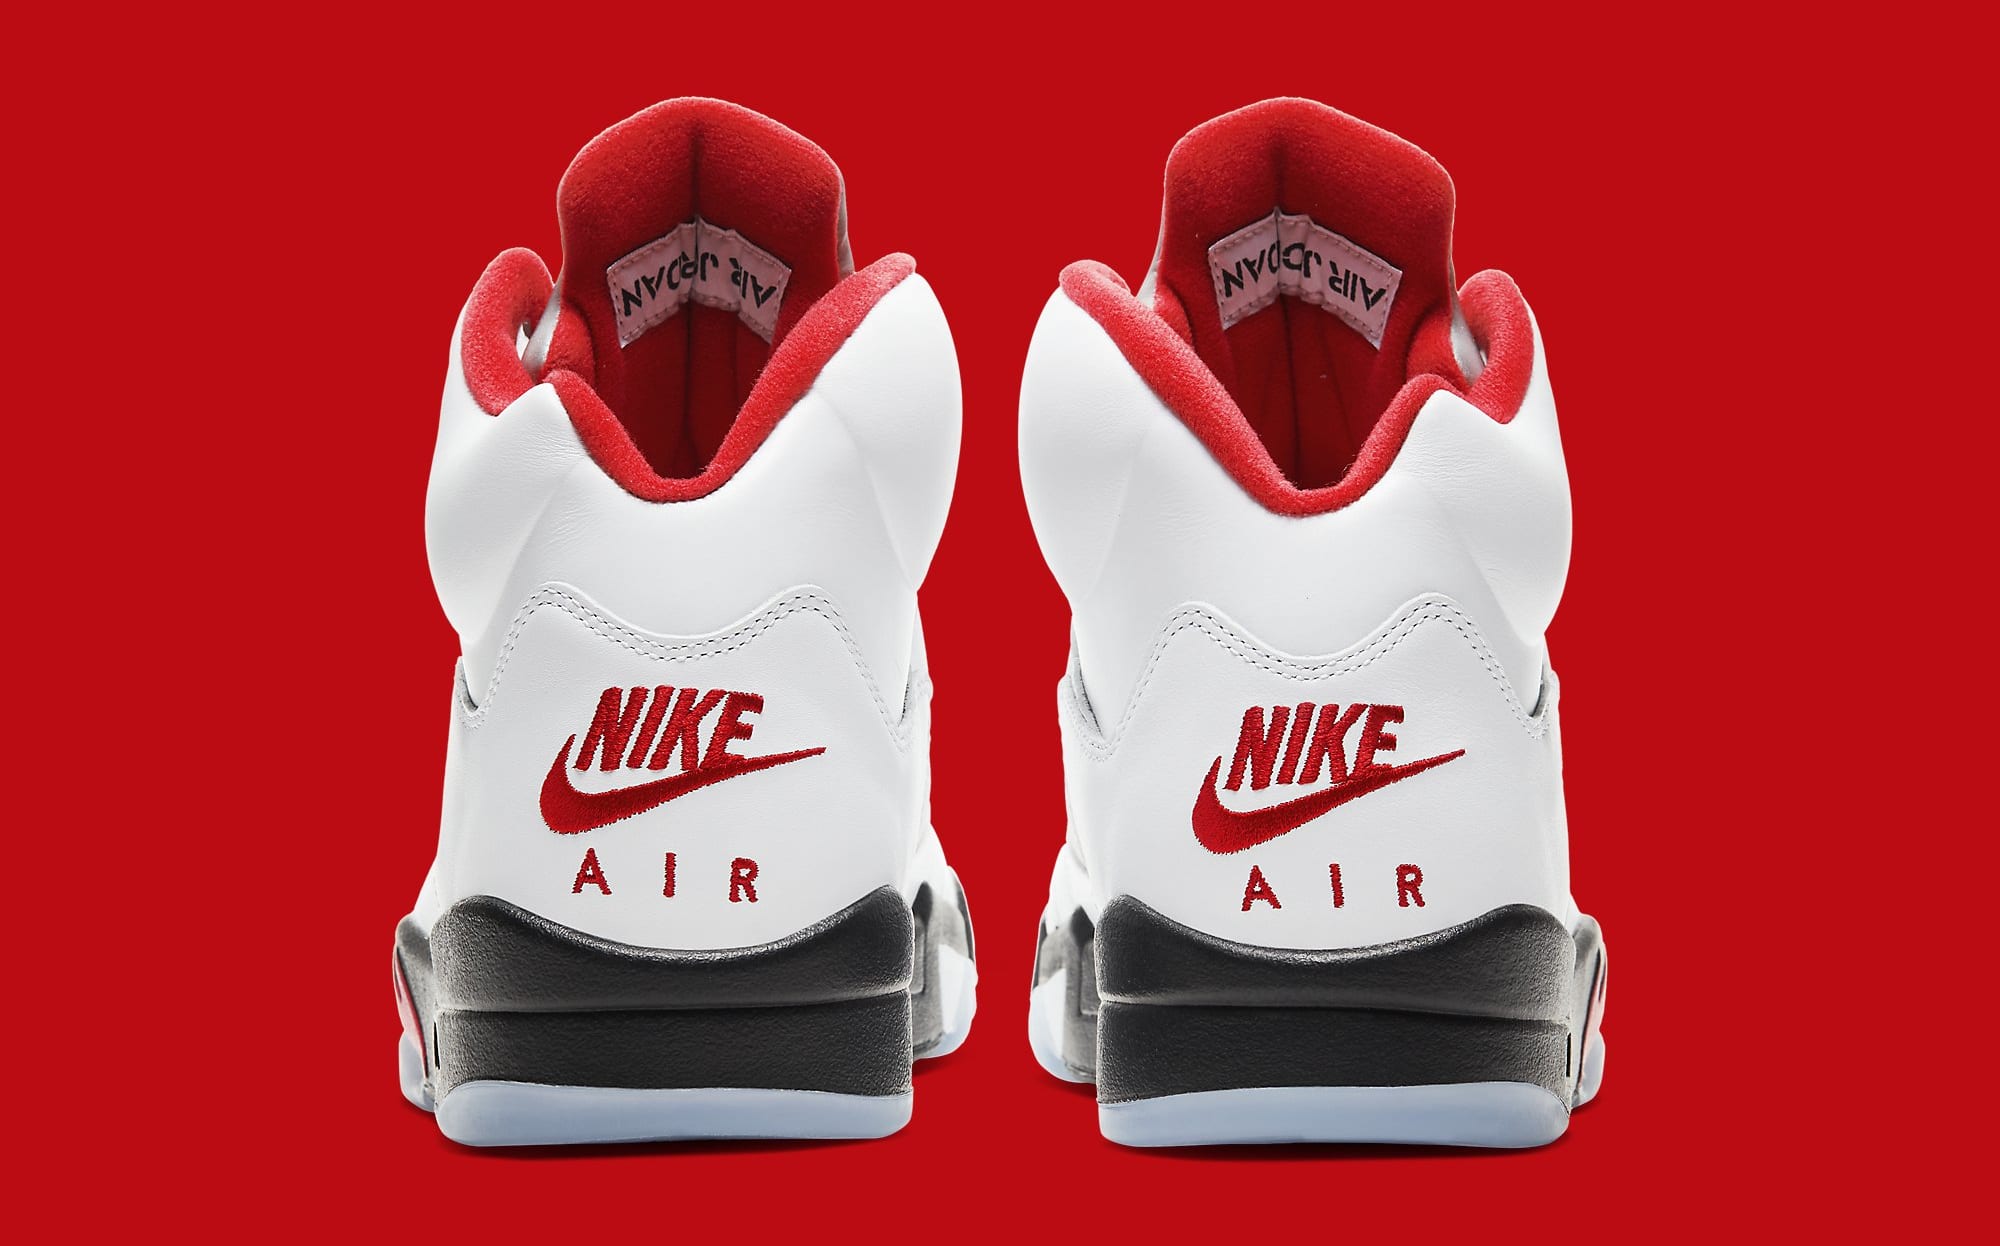 Air Jordan 5 "Fire Red" Finally Gets Official Release Date